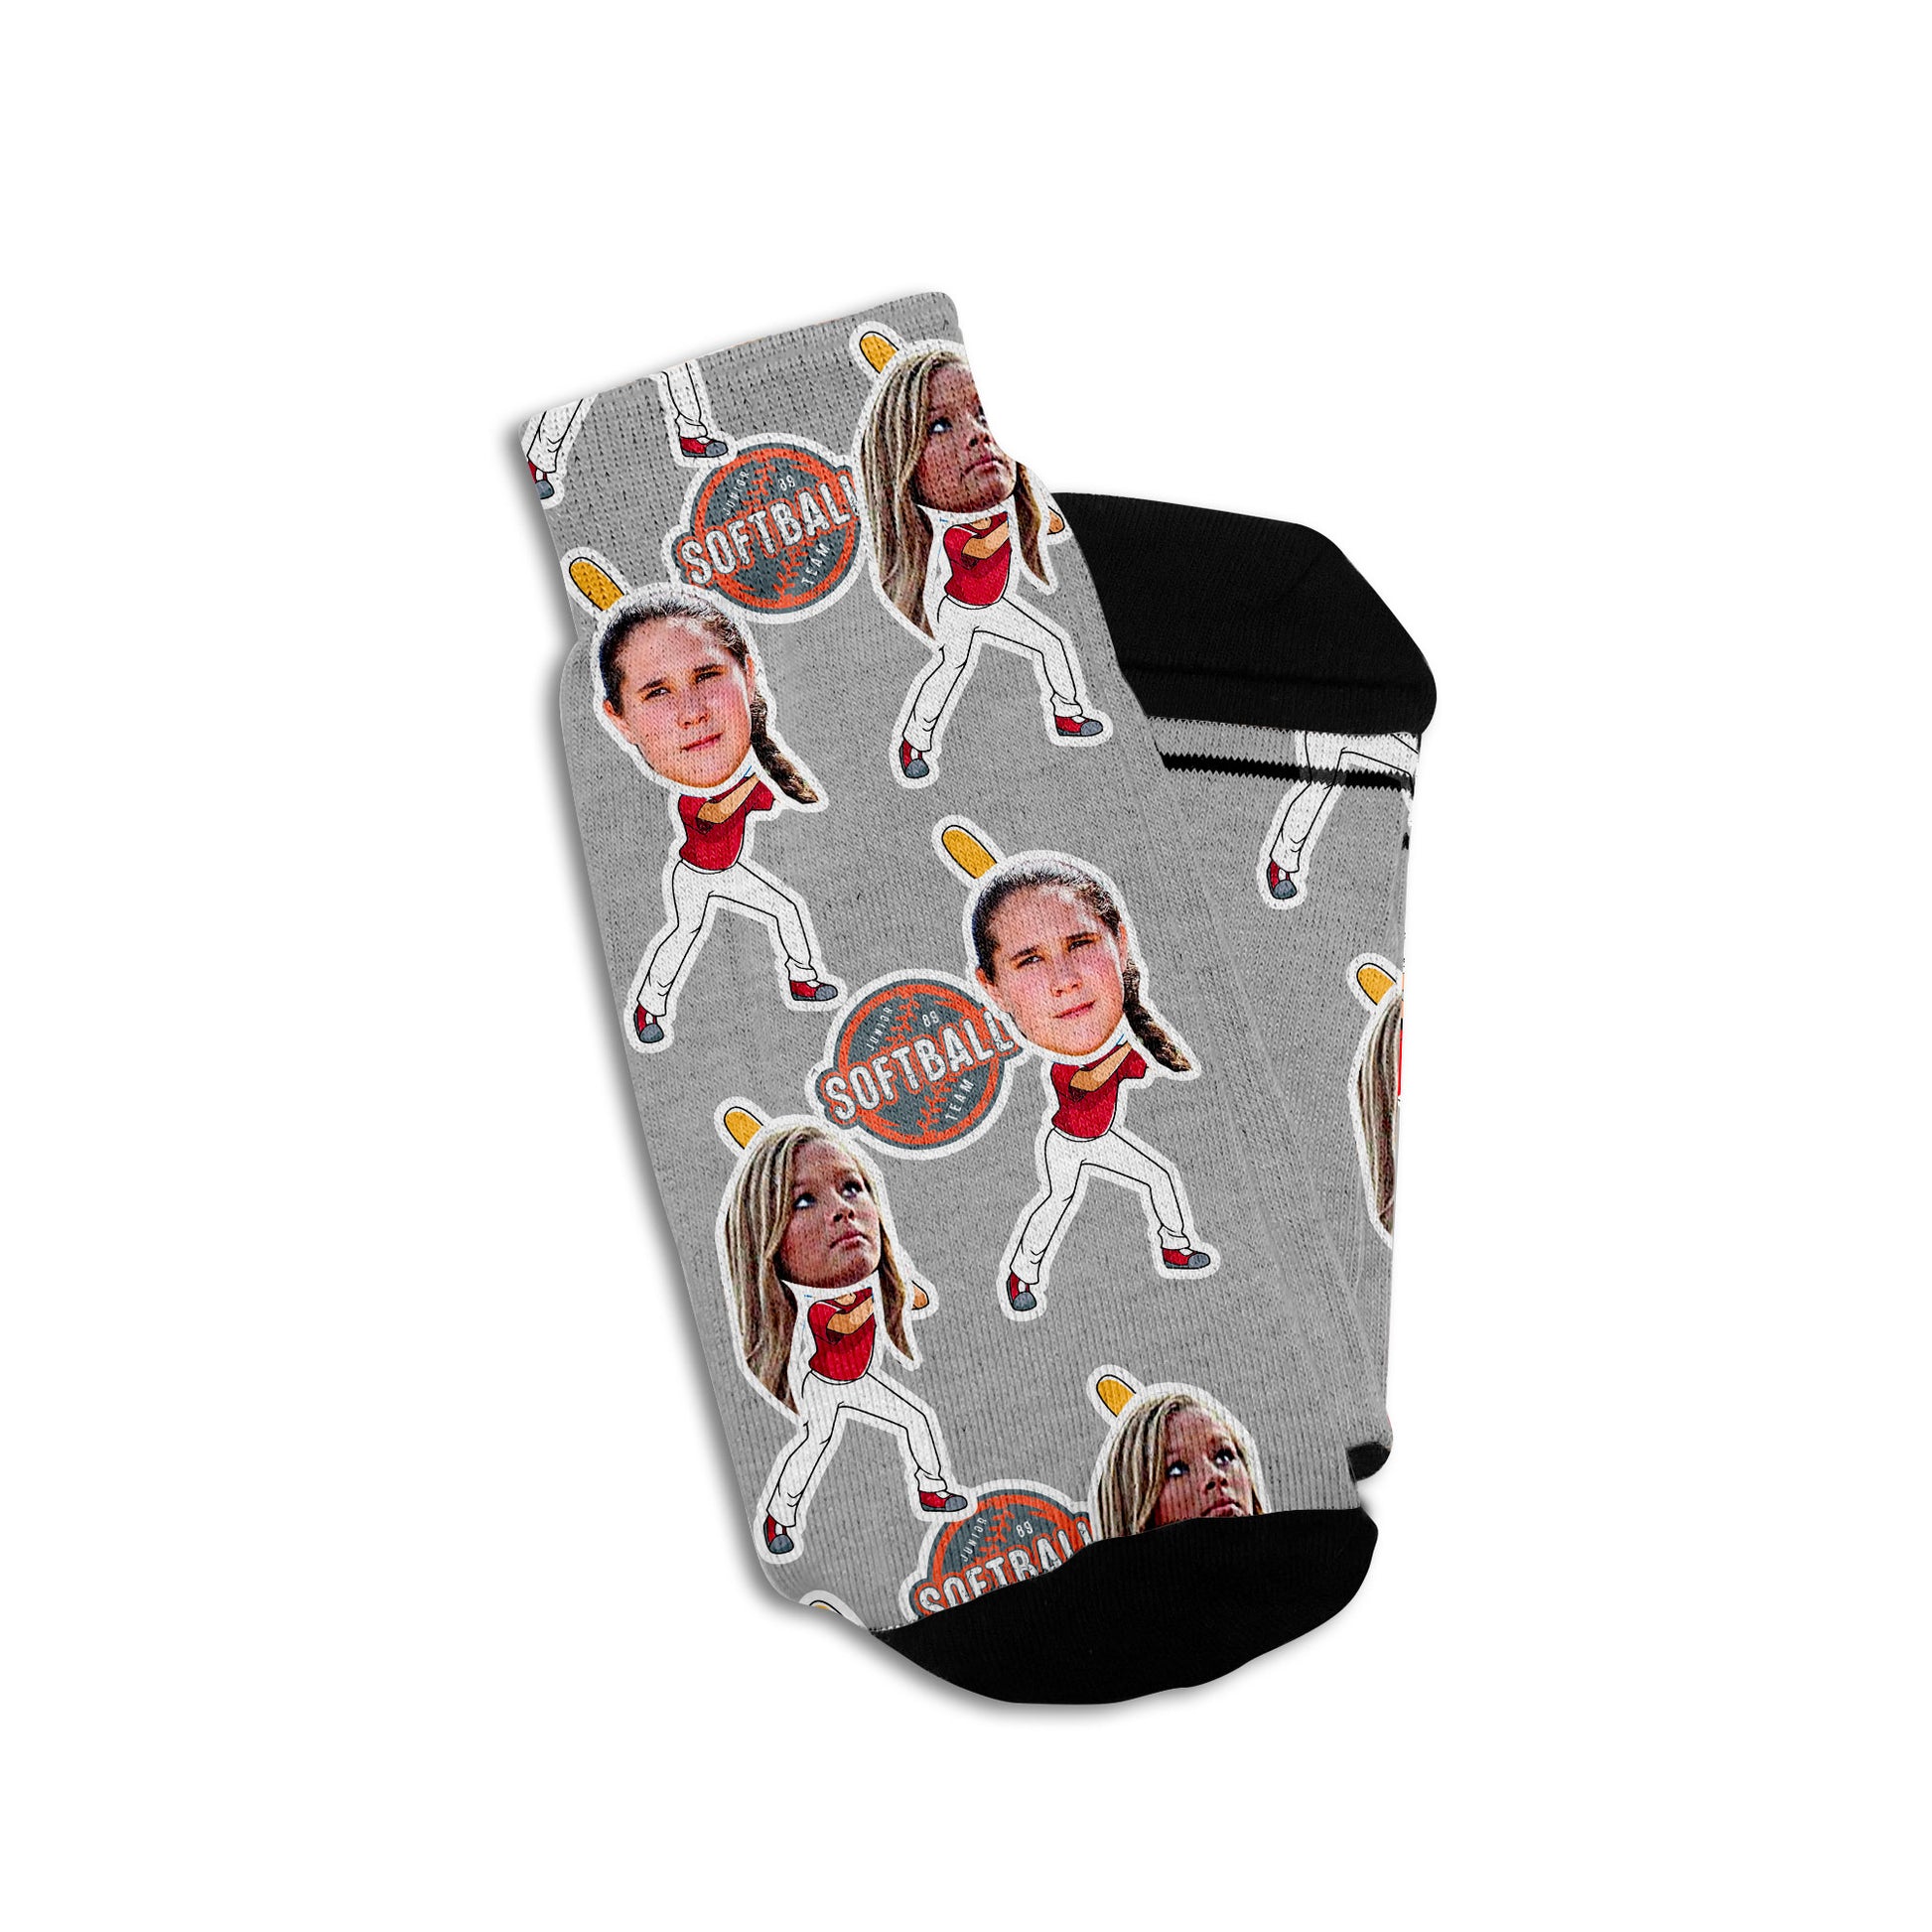 personalized softball socks with real photos on cartoon bodies on grey socks